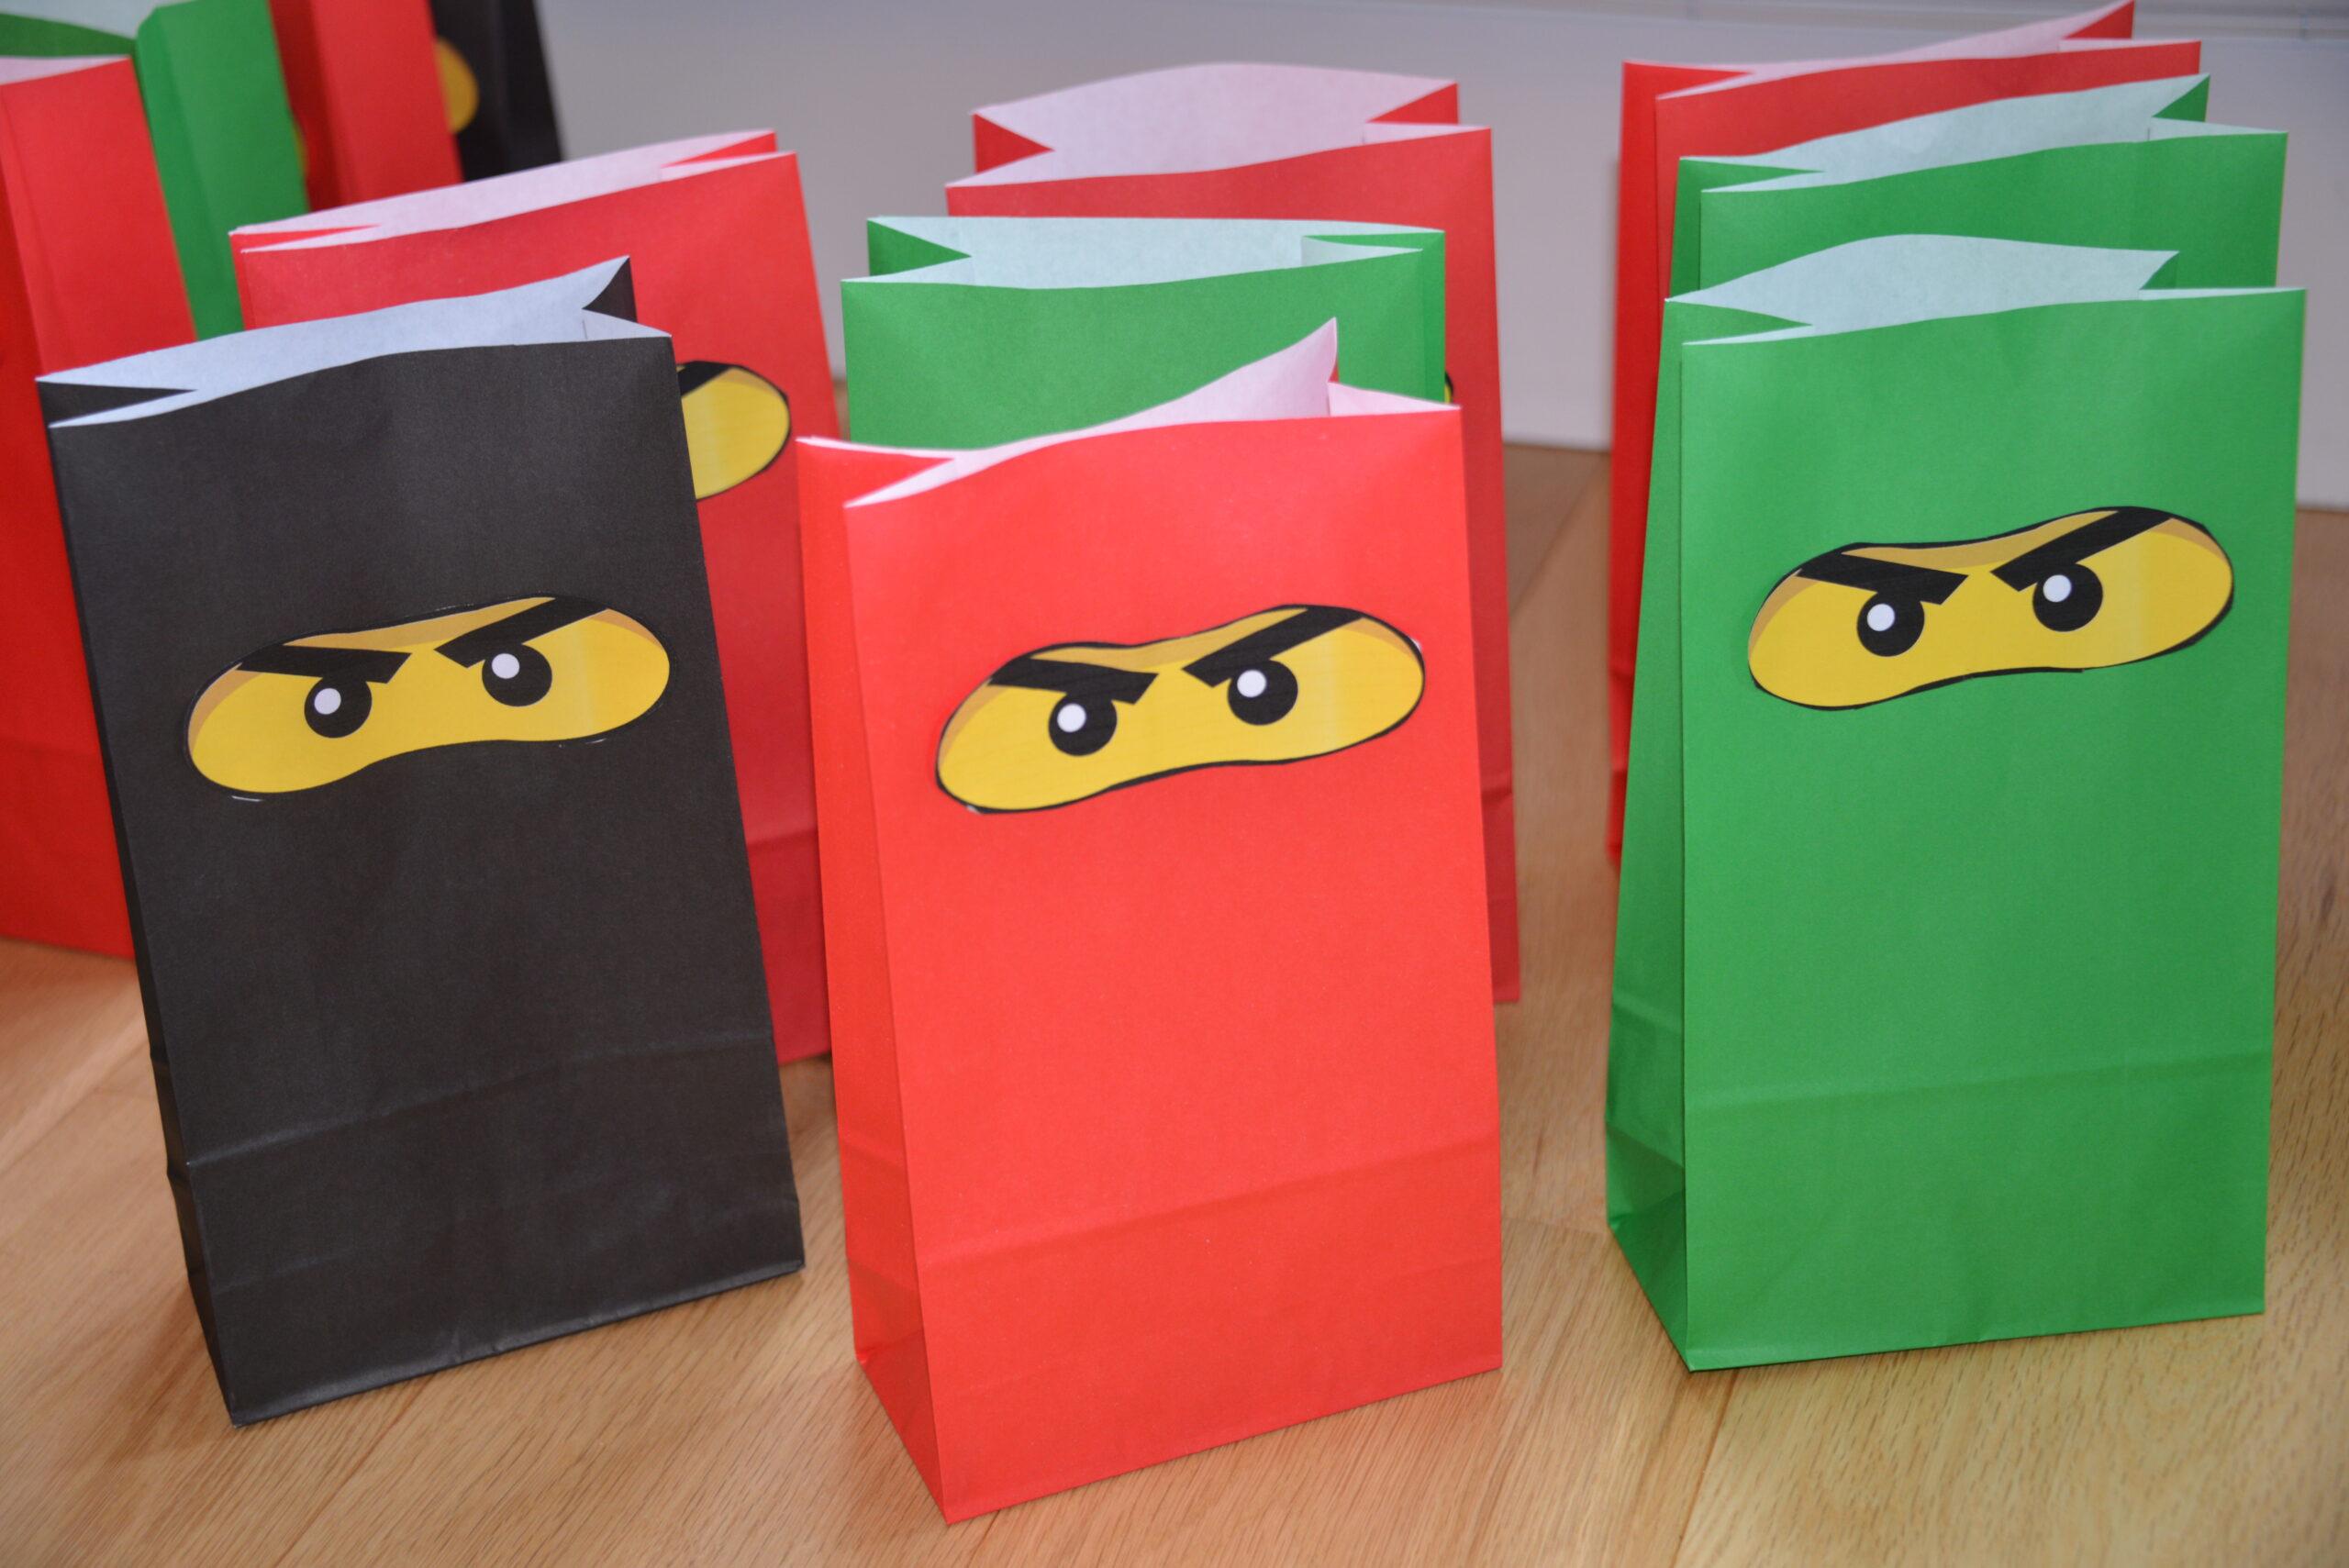 Easy Ninjago party bags using coloured paper bags and print out Ninjago eyes